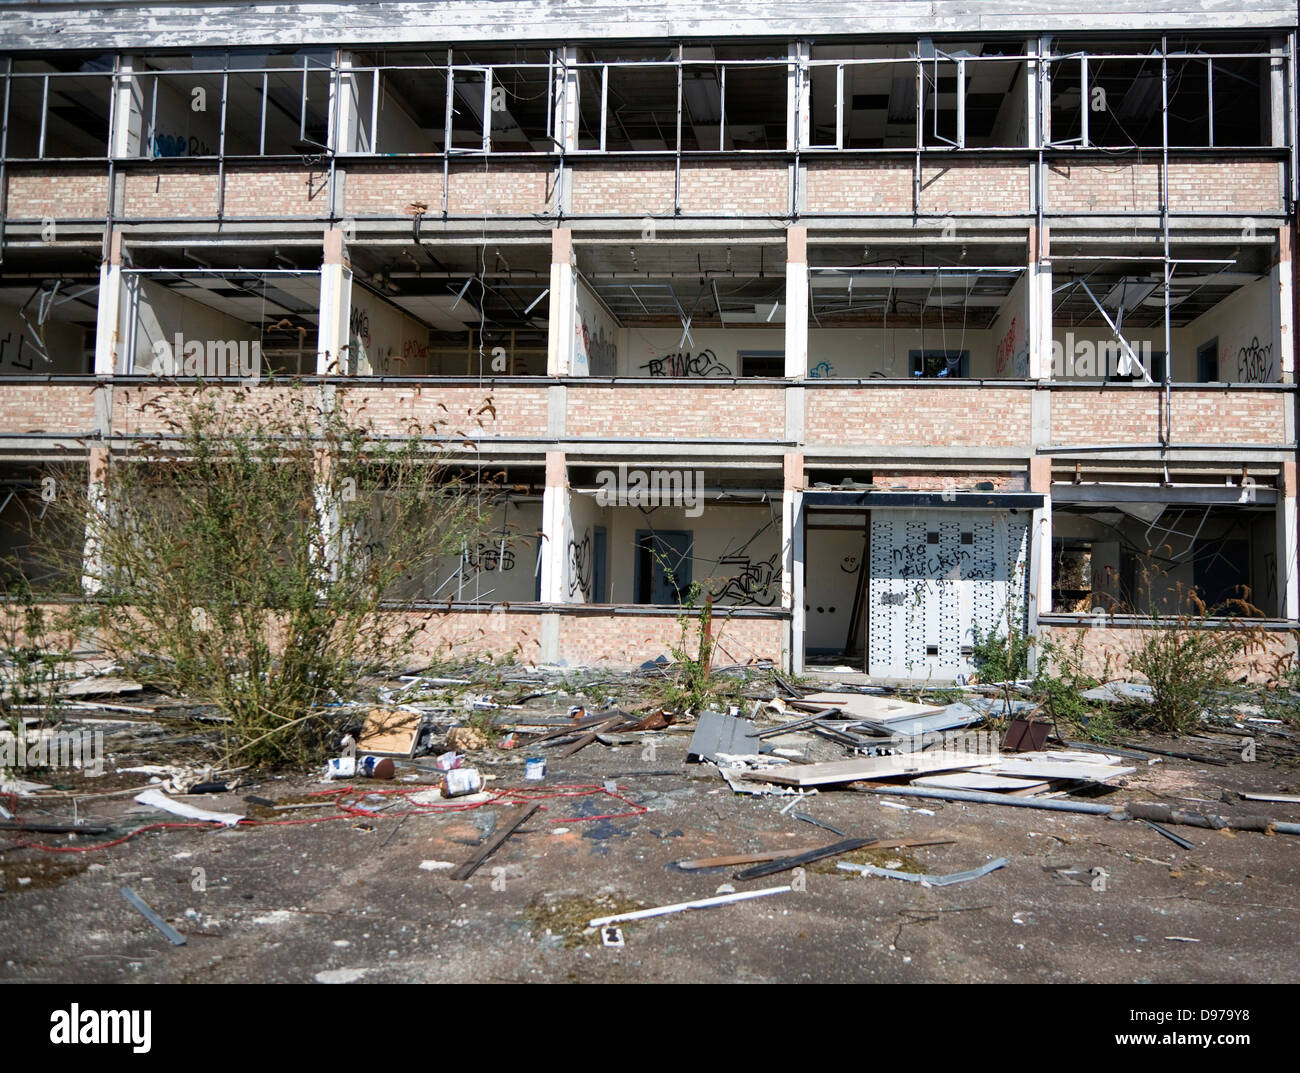 deindustrialisation-and-dereliction-of-industrial-buildings-at-brantham-D979Y8.jpg